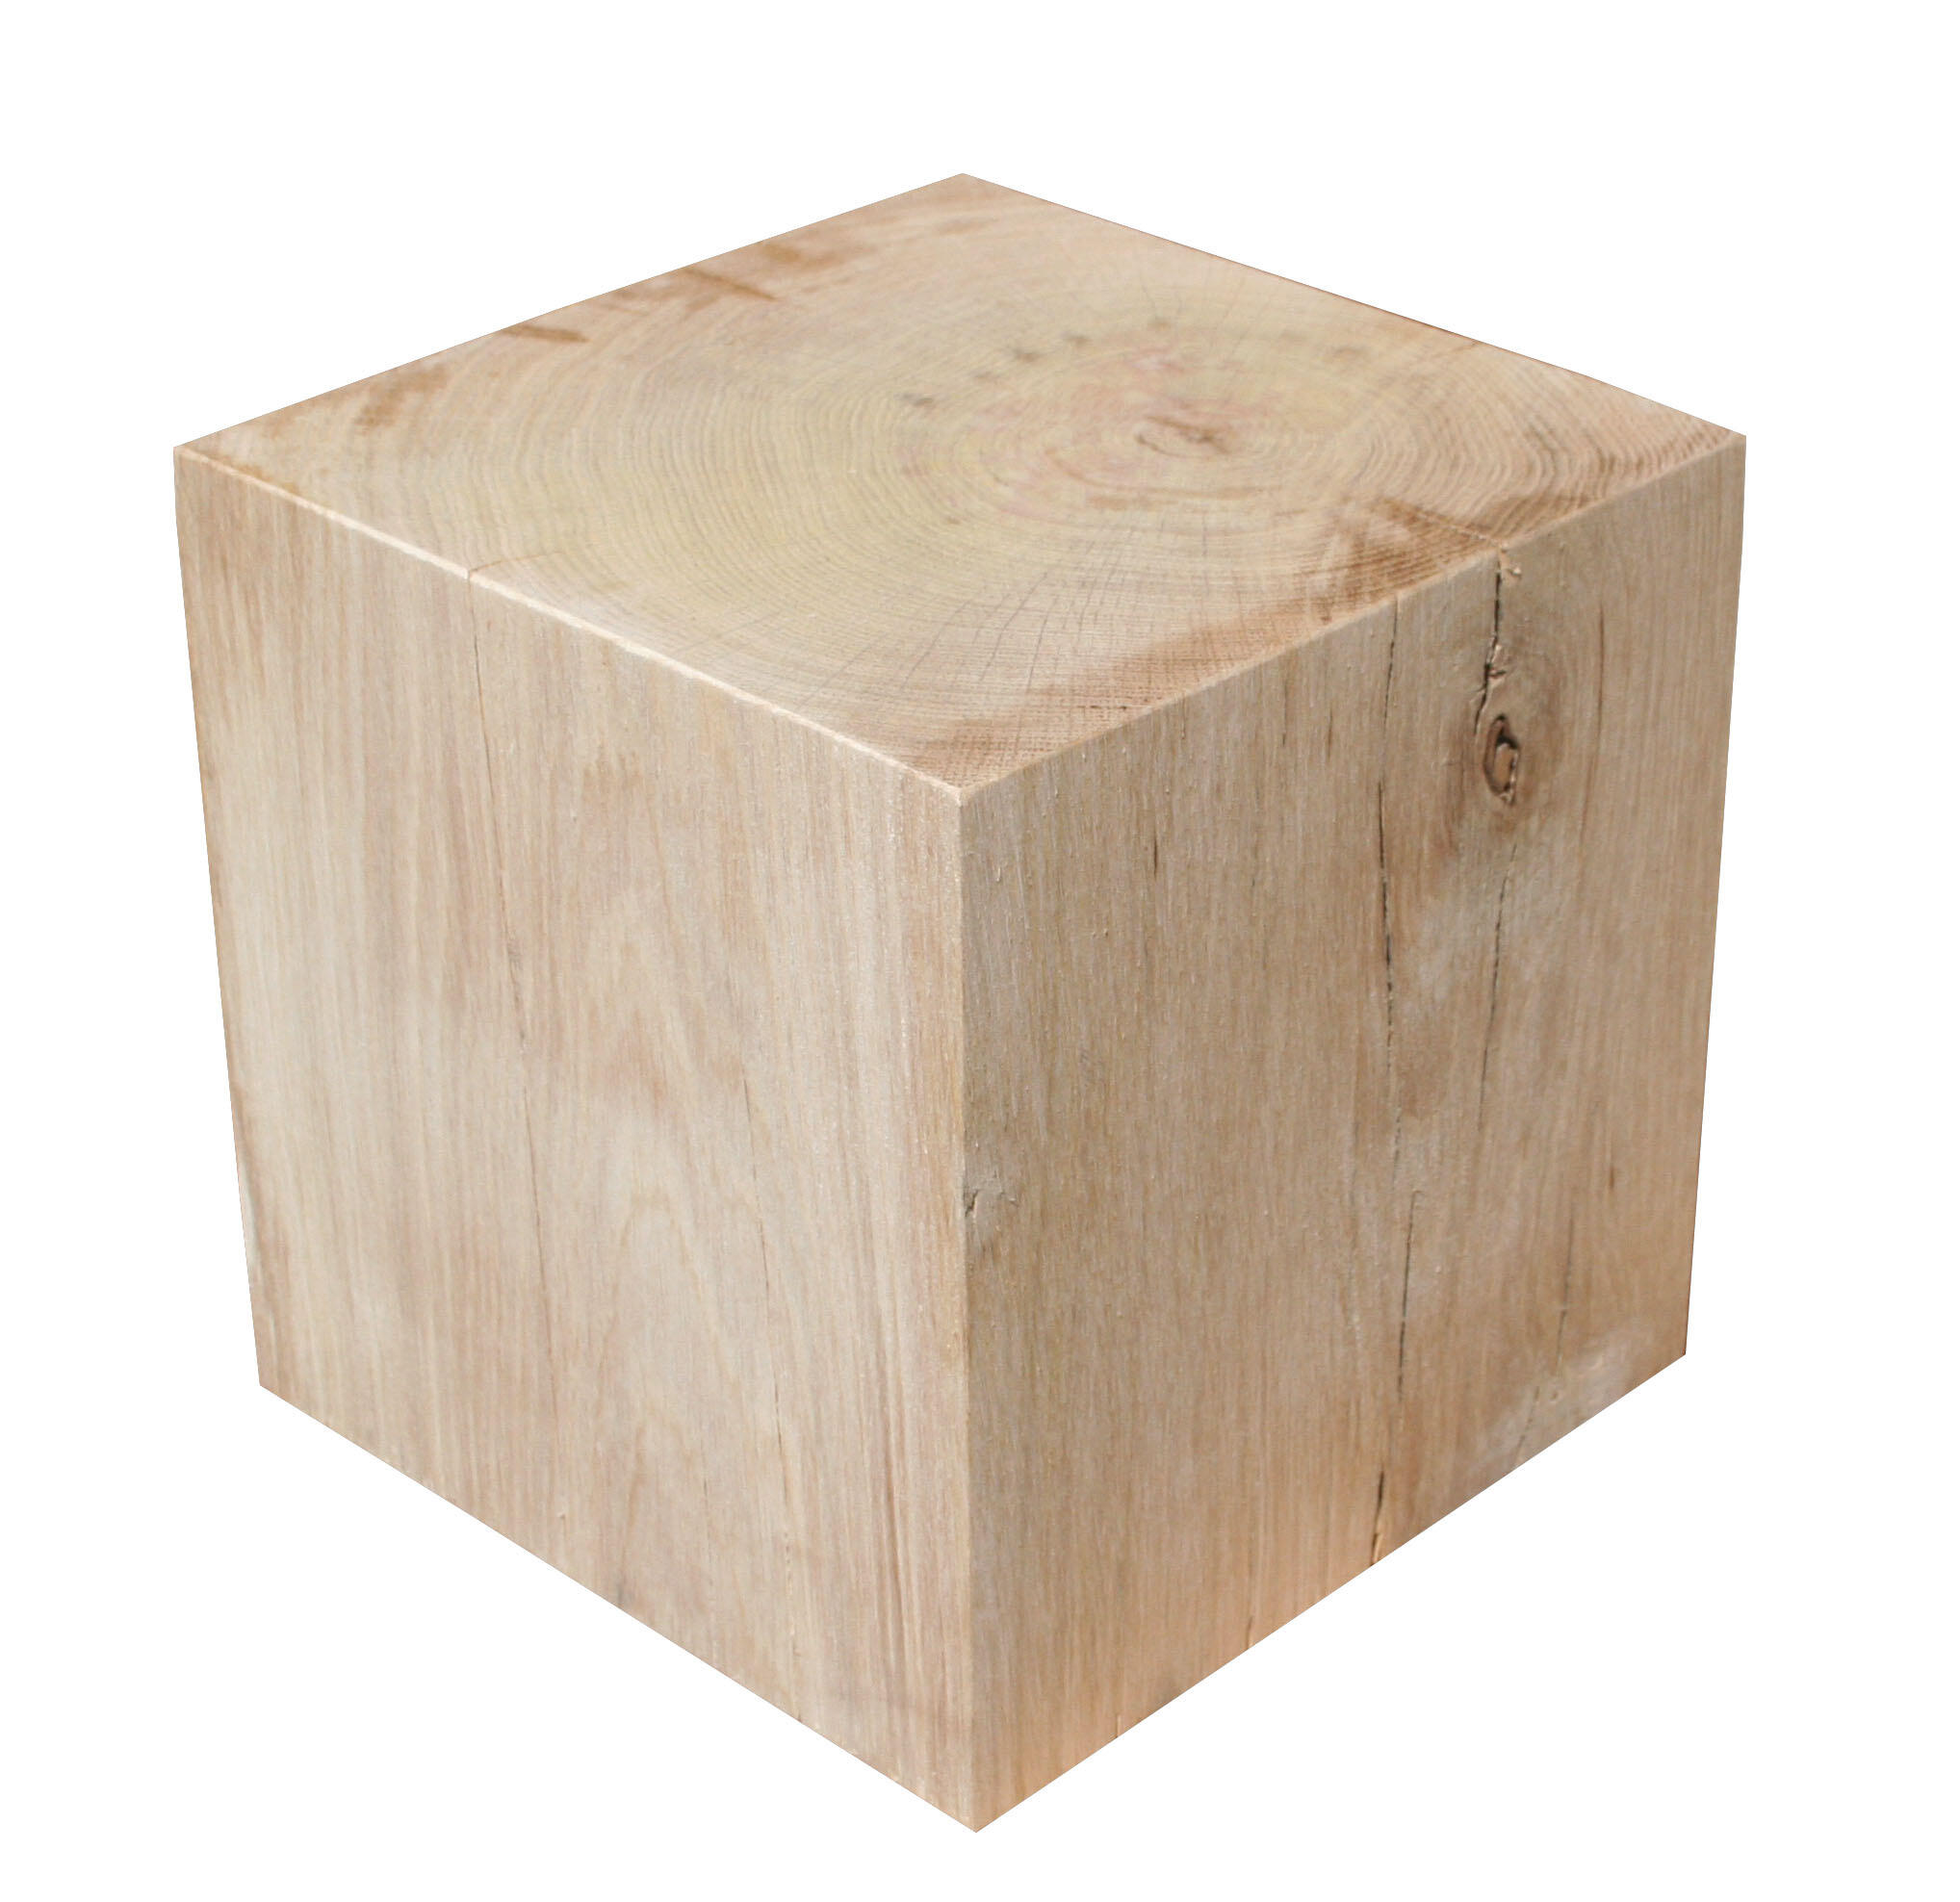 Cube chêne raboté 4 faces, 19 x 19 x 19 cm